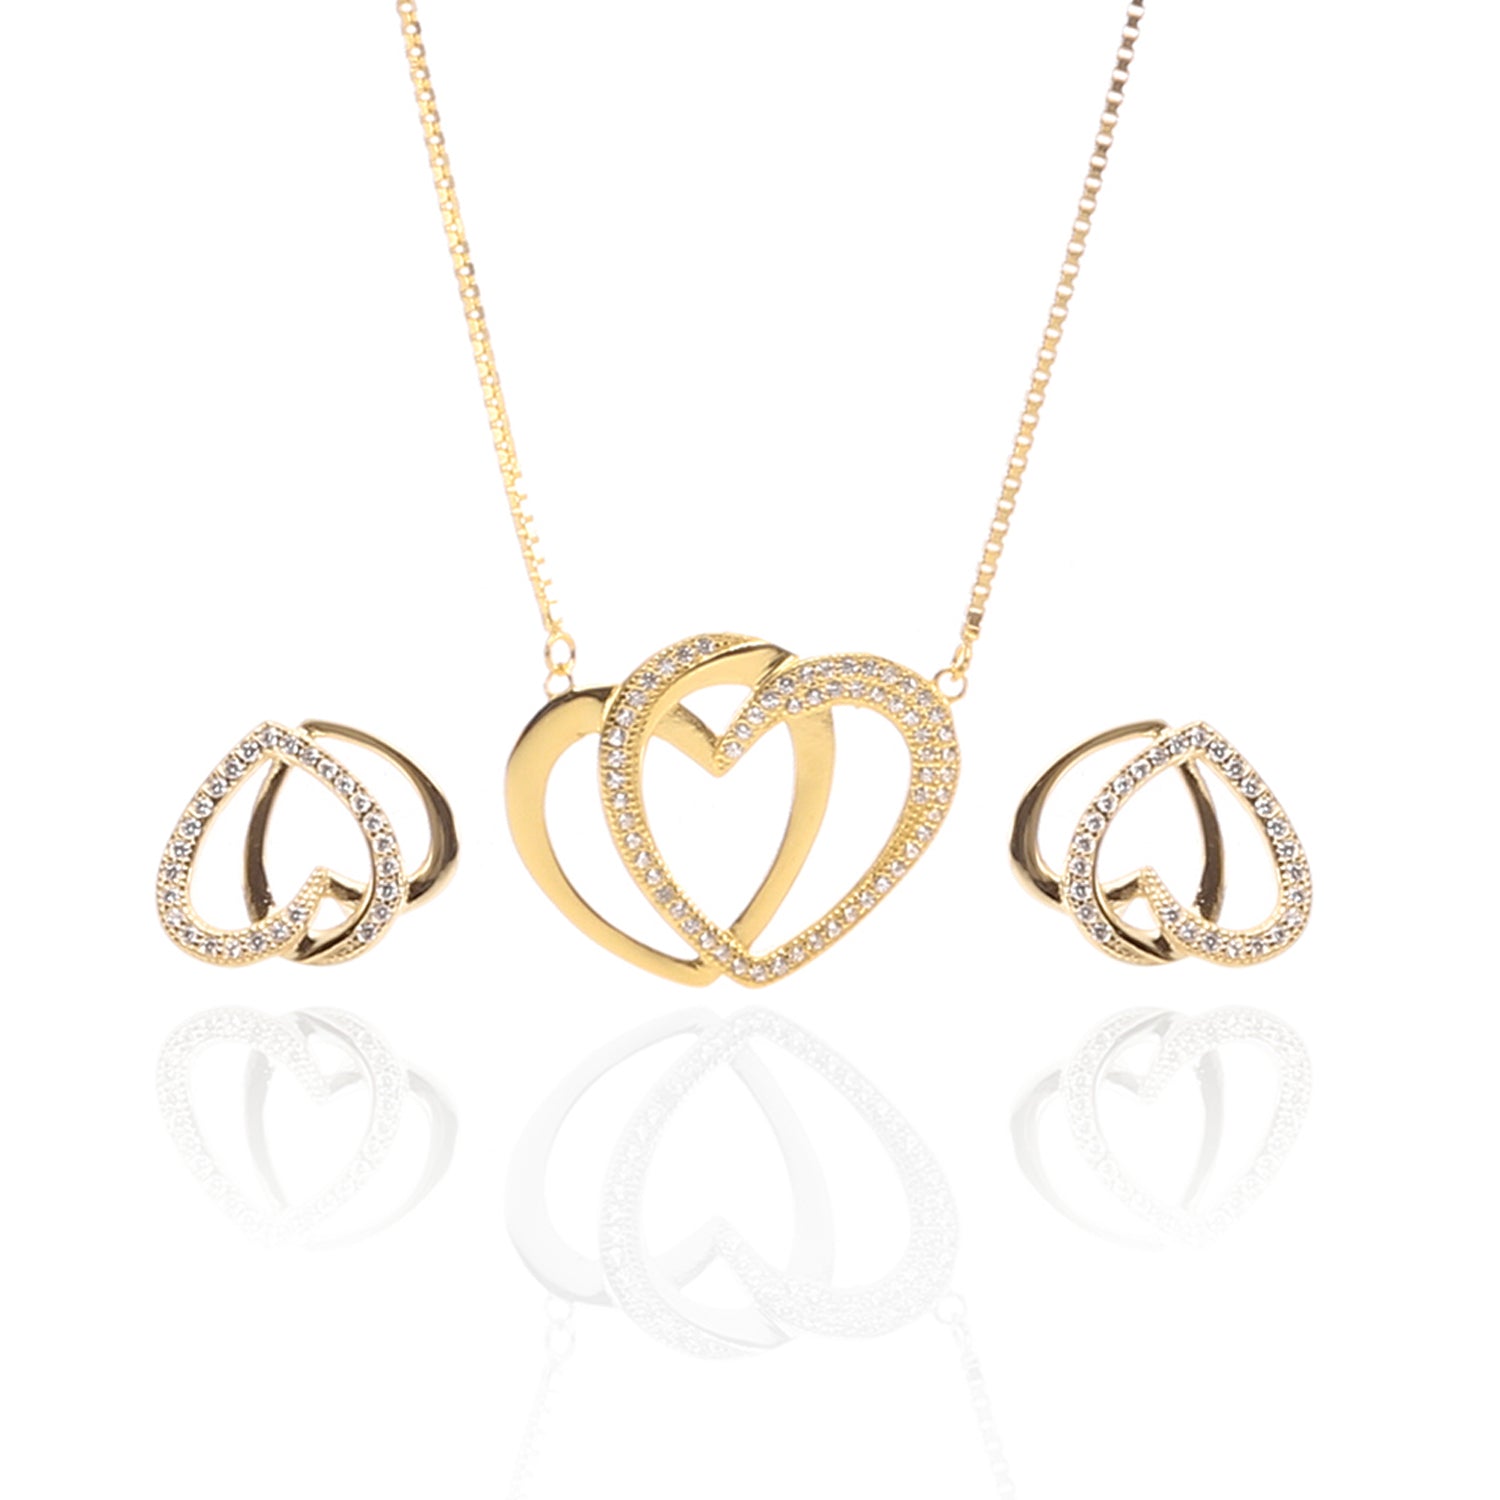 Interlocking Hearts Pendant Necklace and Earrings Set - ARJW1025GD ARCADIO